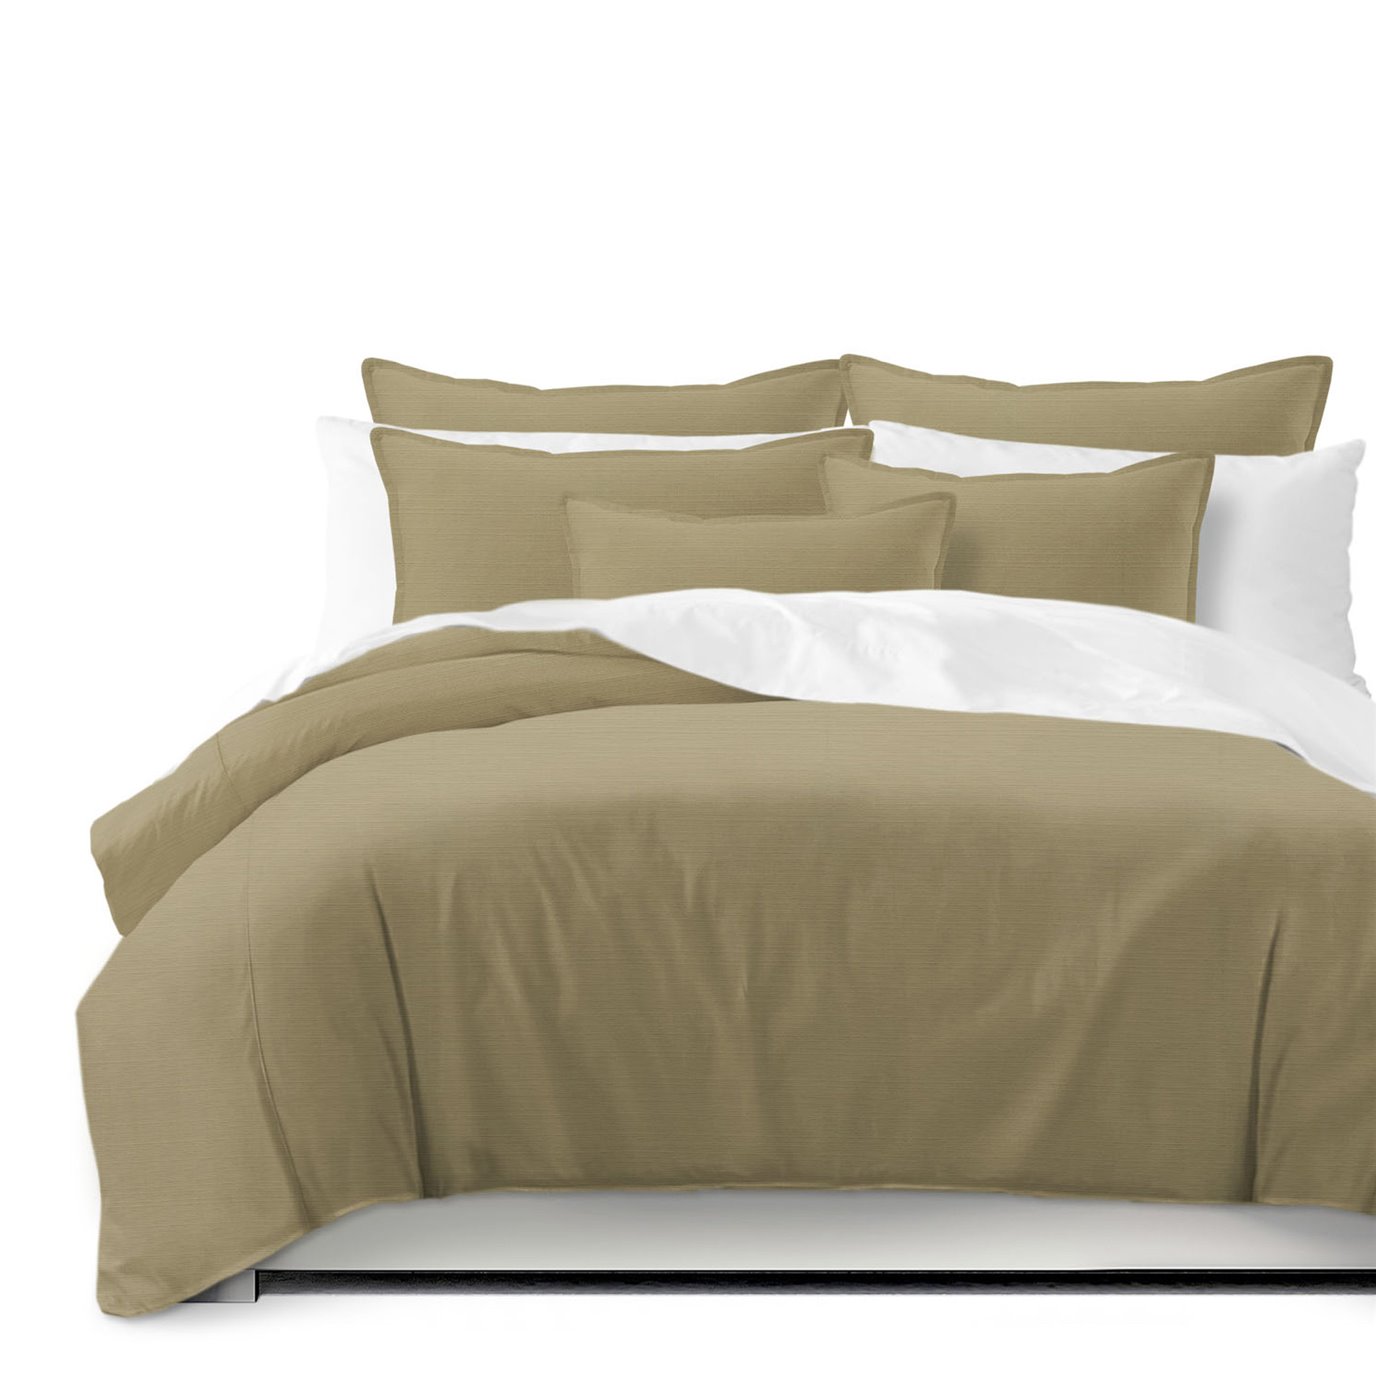 Nova Gold Comforter and Pillow Sham(s) Set - Size Twin